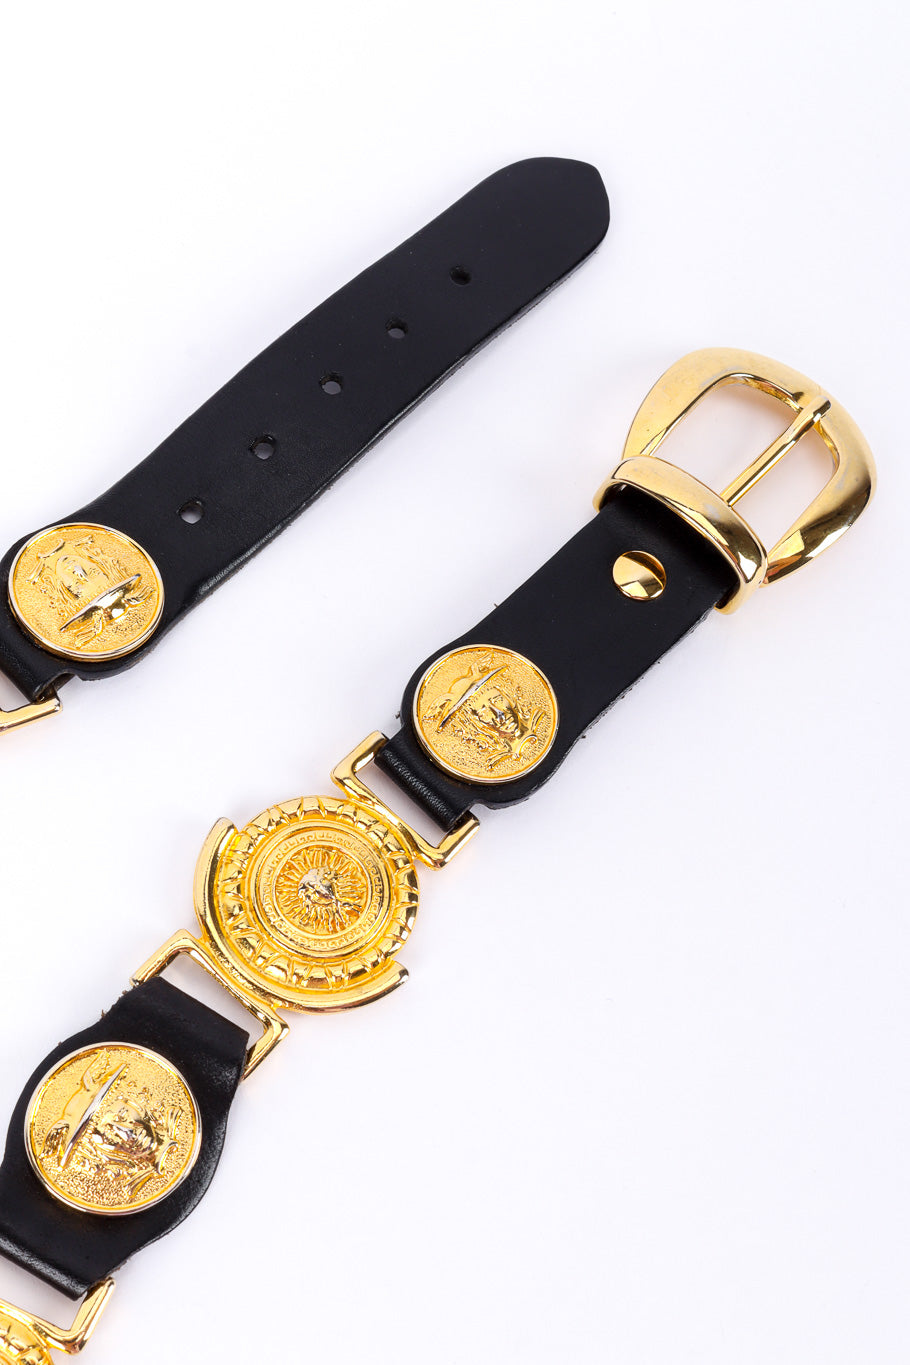 Medallion linked leather belt by Milos on white background buckle and end tip @recessla